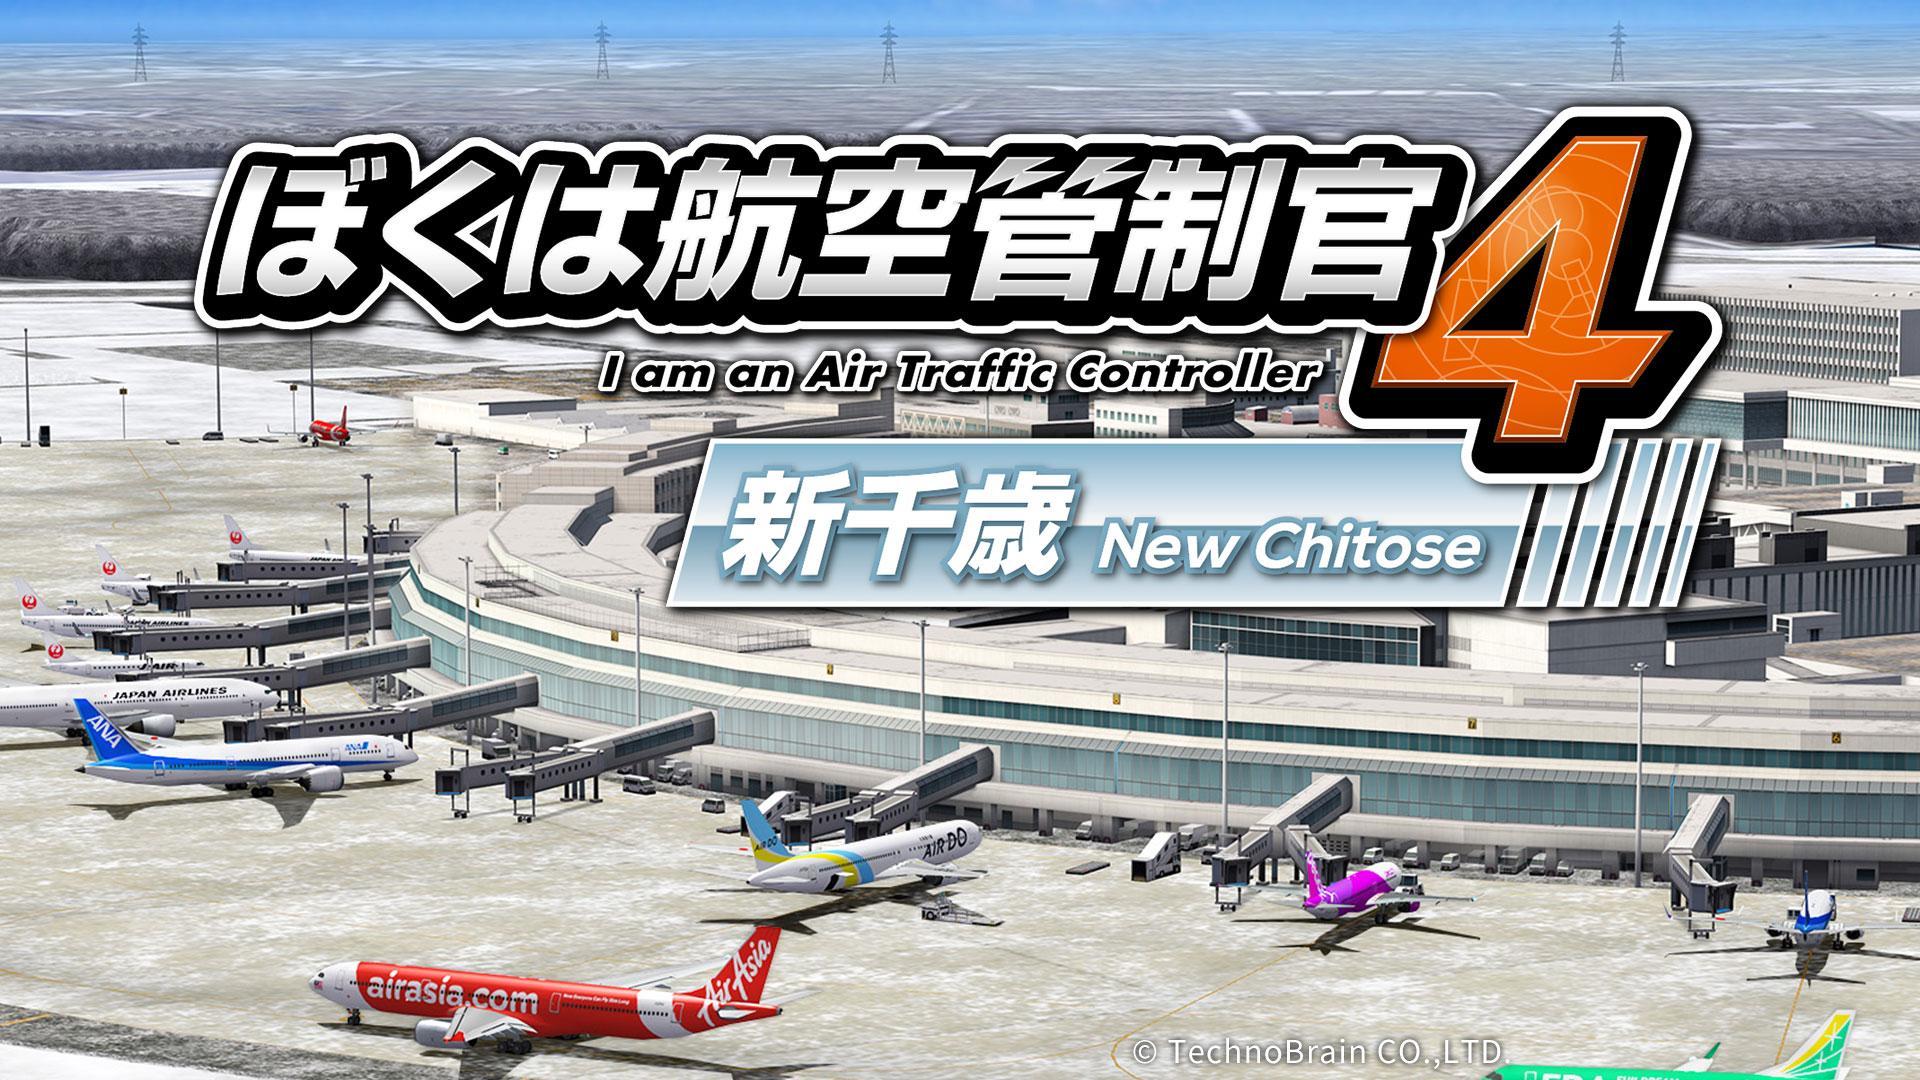 Screenshot 1 of Soy un controlador de tránsito aéreo 4 New Chitose 1.1.40